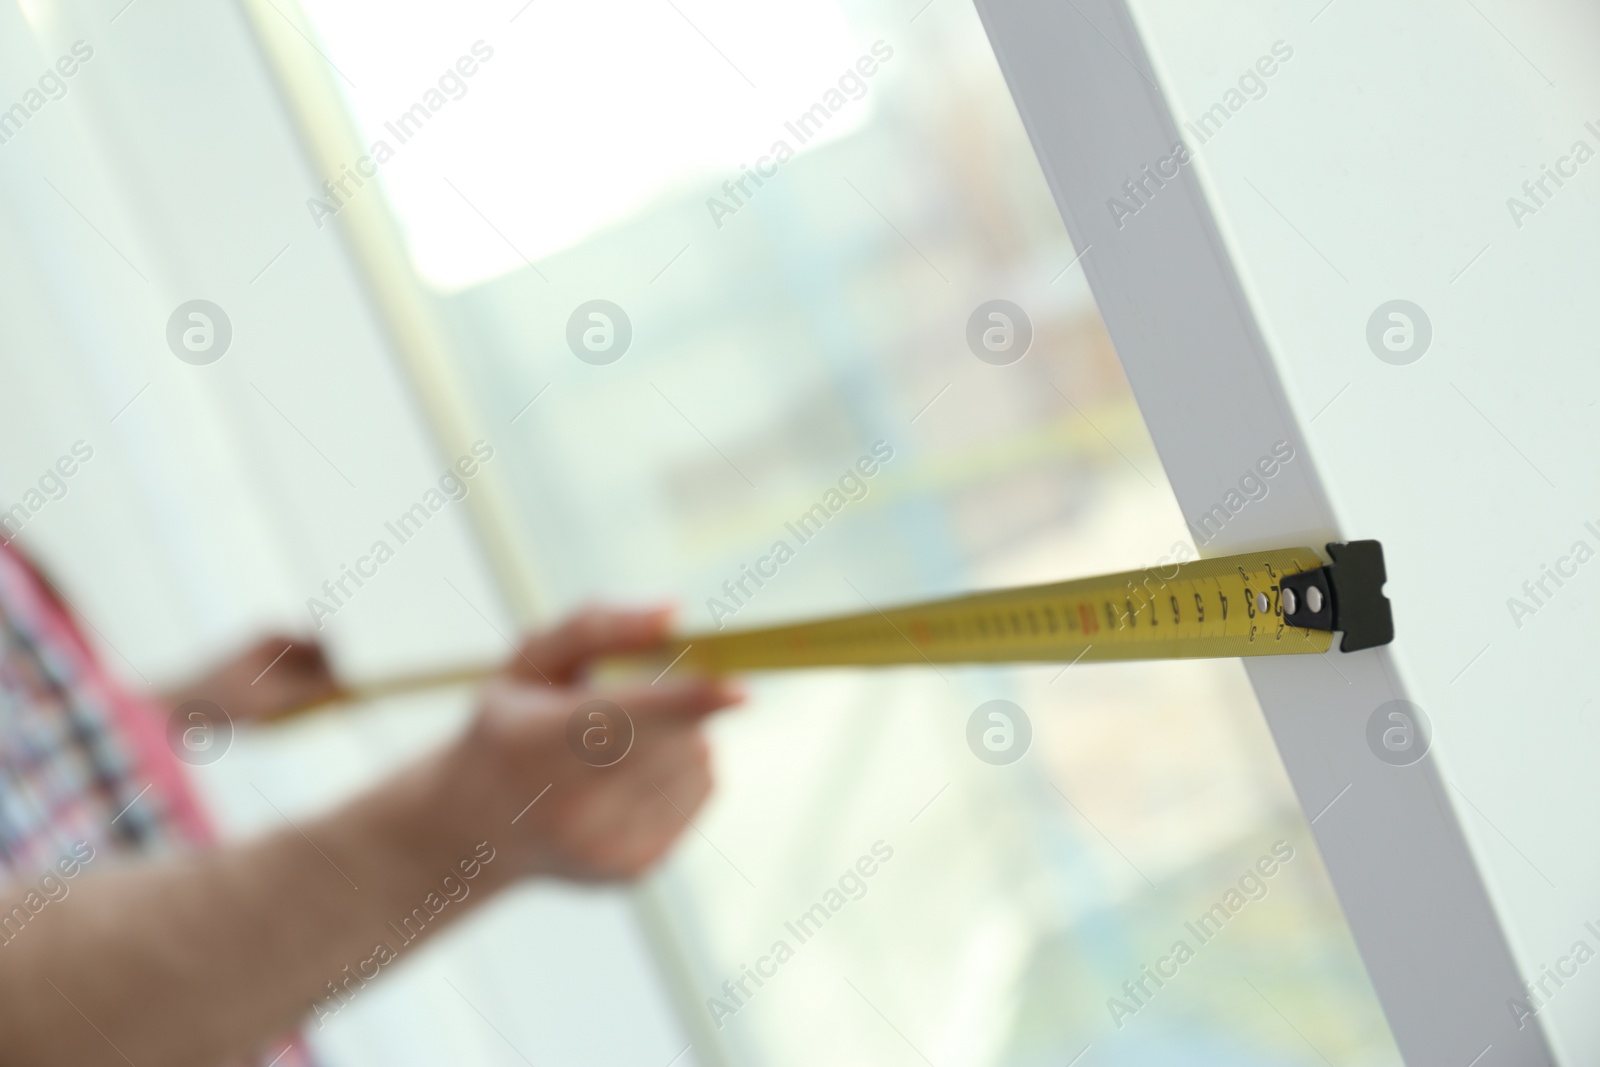 Photo of Man measuring window, closeup view. Construction tool